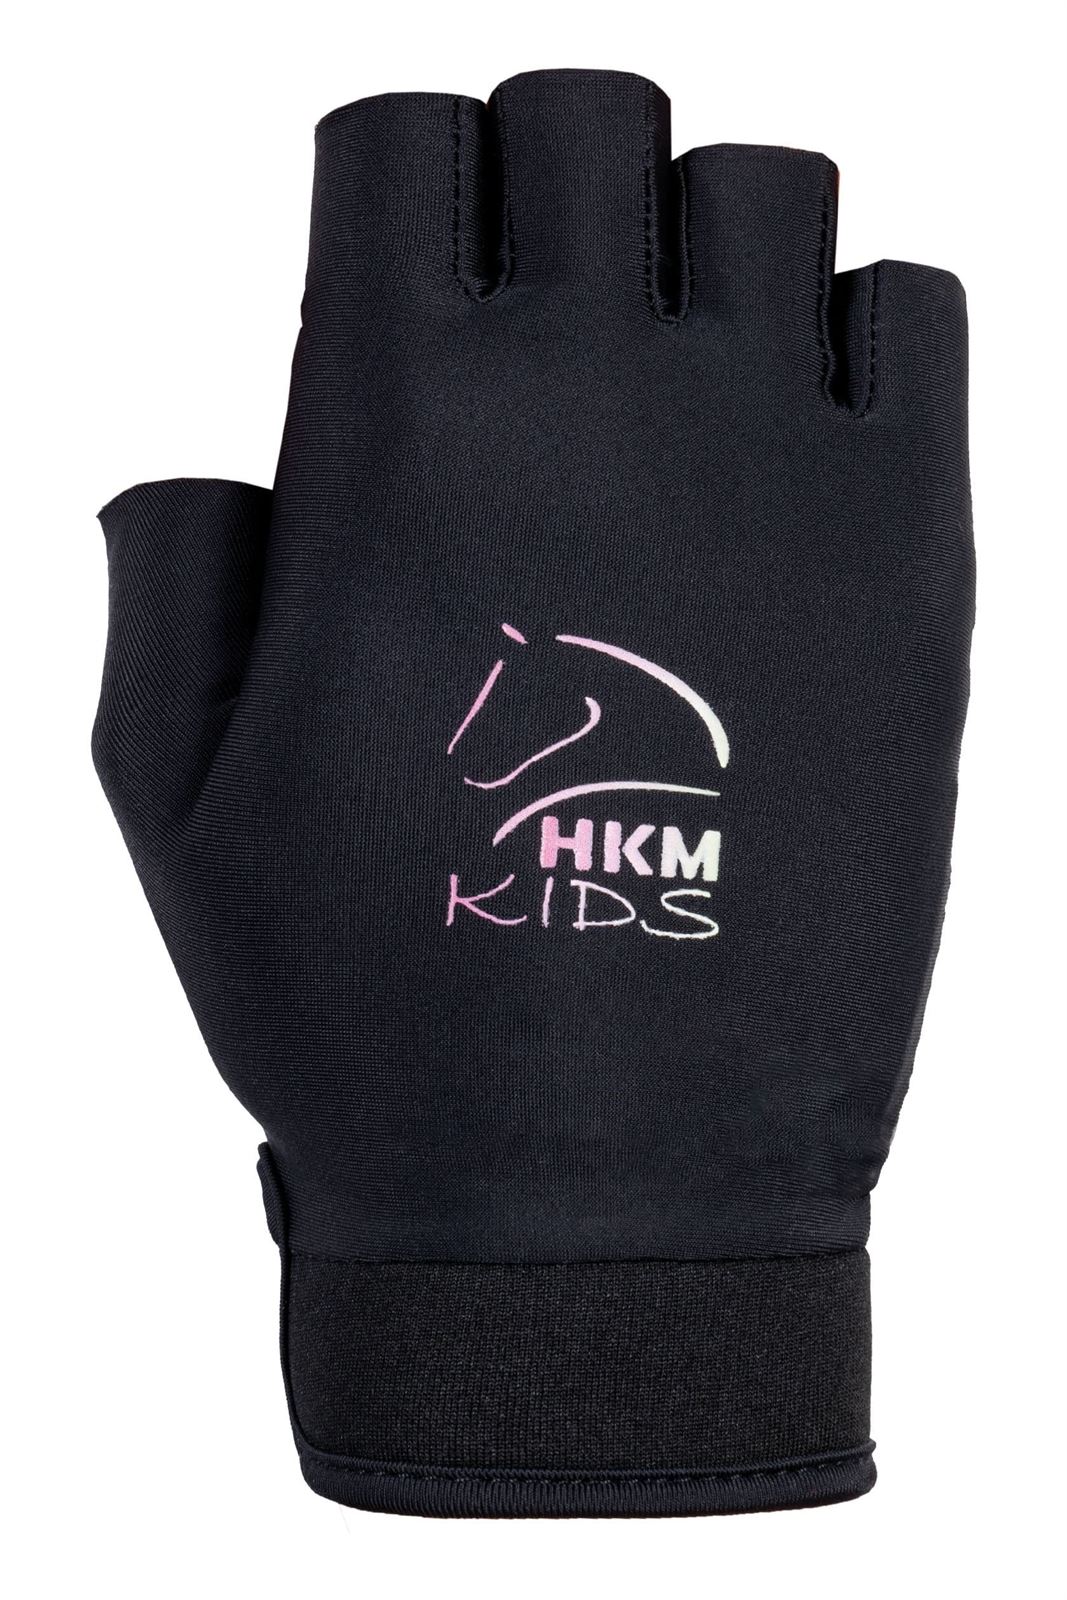 Guantes de montar Hobby Horsing HKM Sports Equipment color negro/gris - Imagen 5